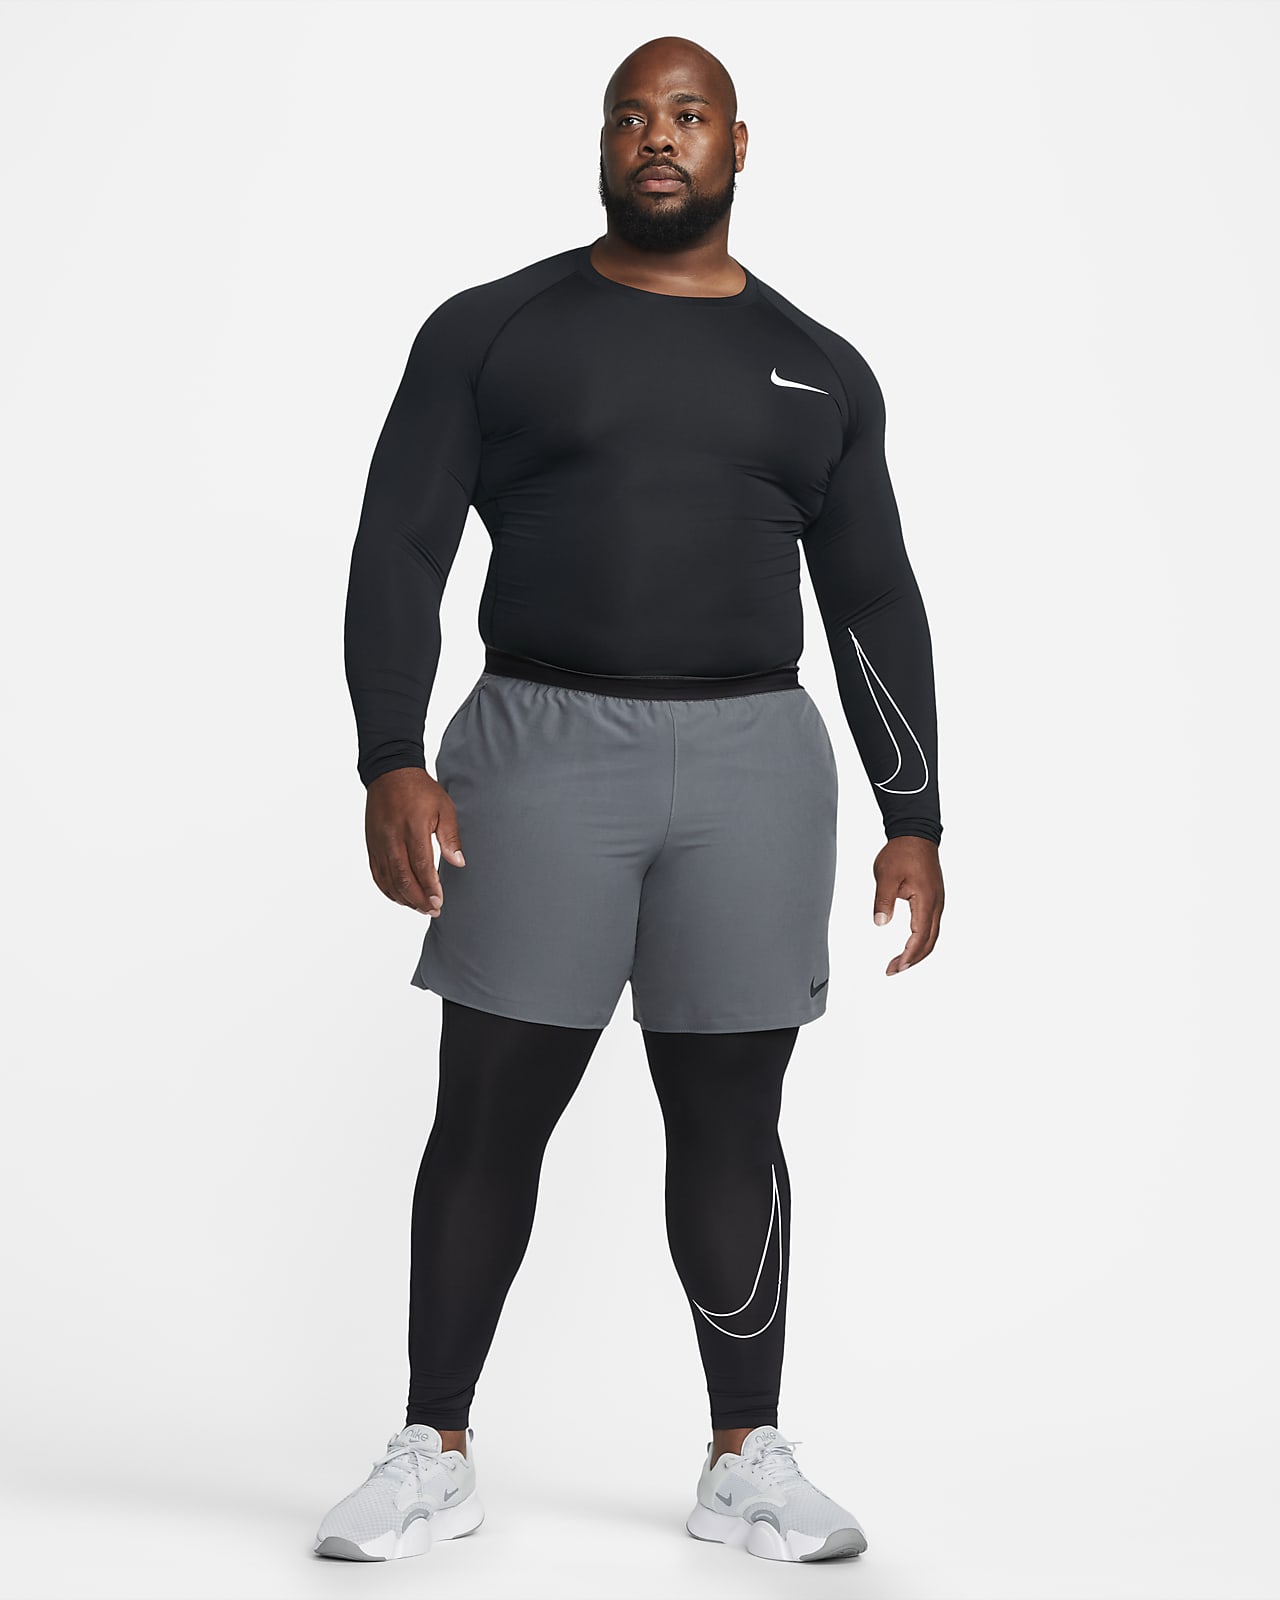 Nike Inner Under Long Sleeve Top Nike Pro DF Tight L/S Top Inner Shirt